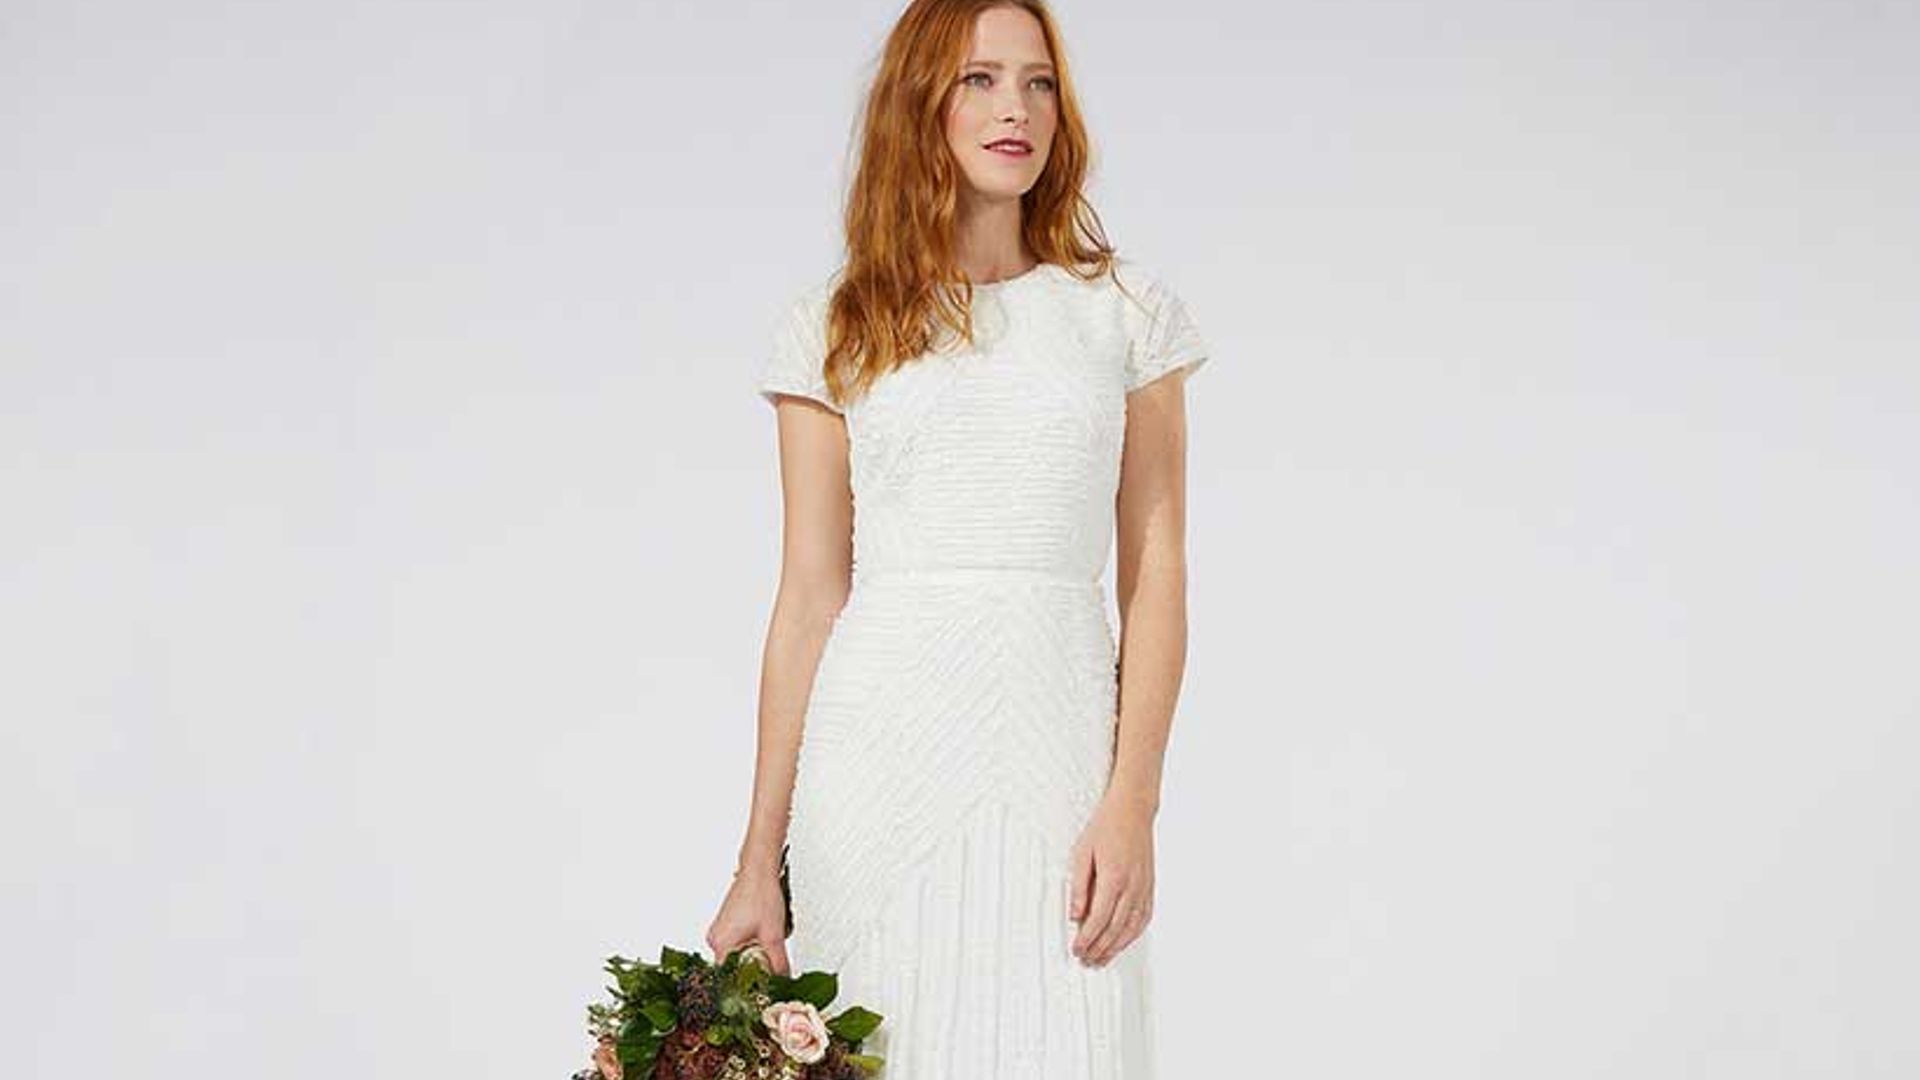 Buy now: The best high street wedding dresses